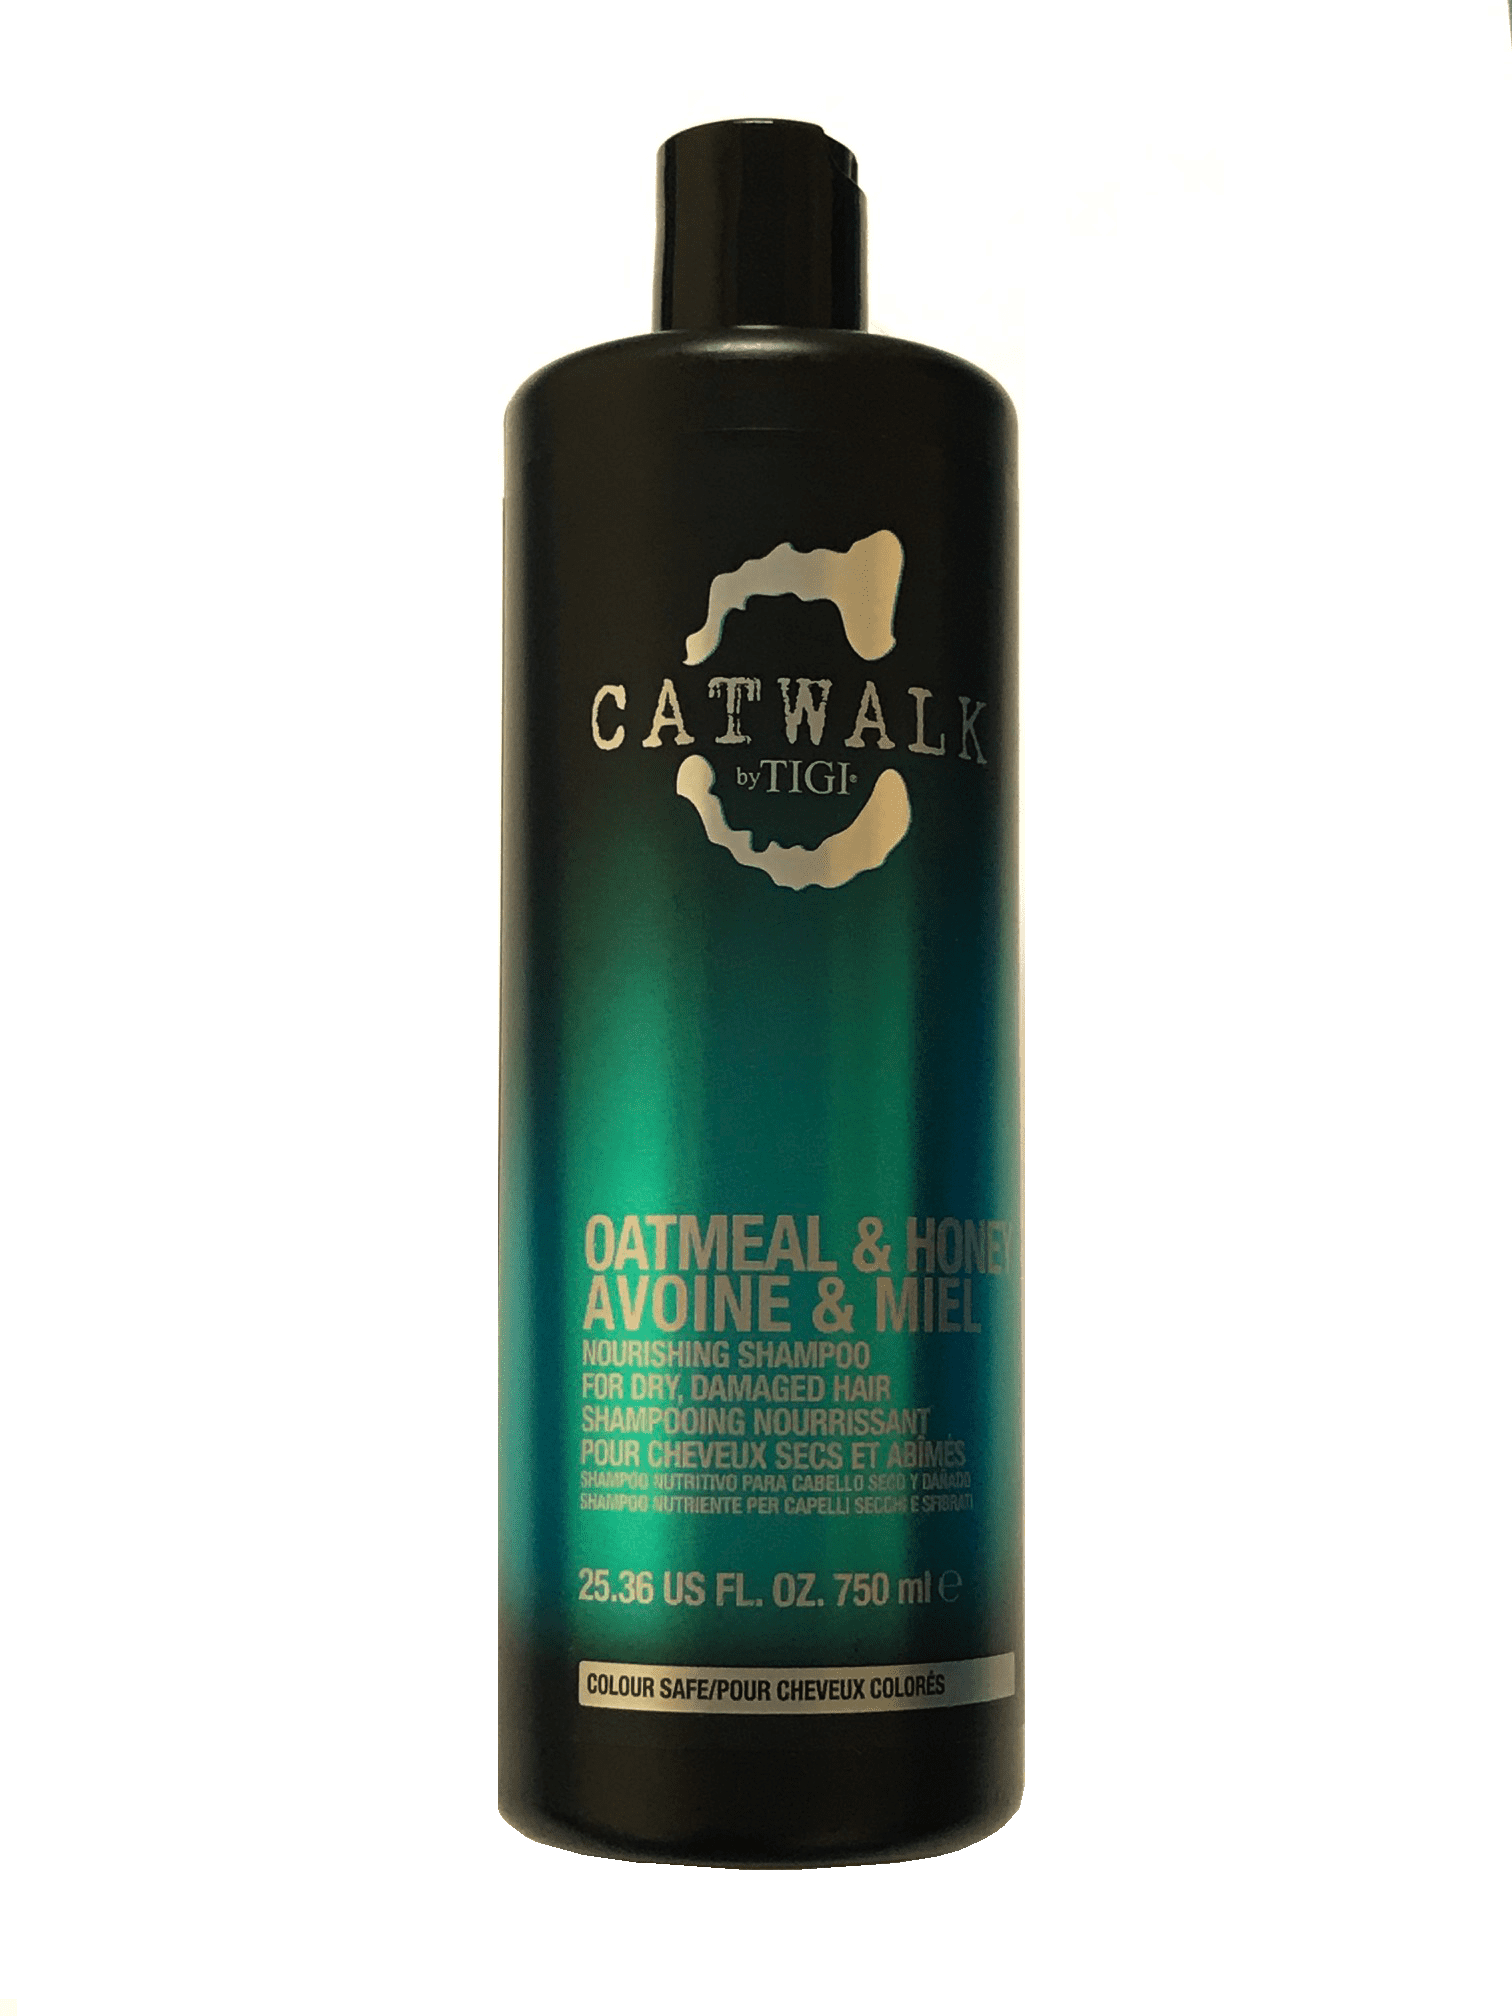 Tigi Catwalk Oatmeal Honey Avoine & Miel Nourishing Shampoo 25.36 Oz, For Dry, Damaged Hair - Walmart.com